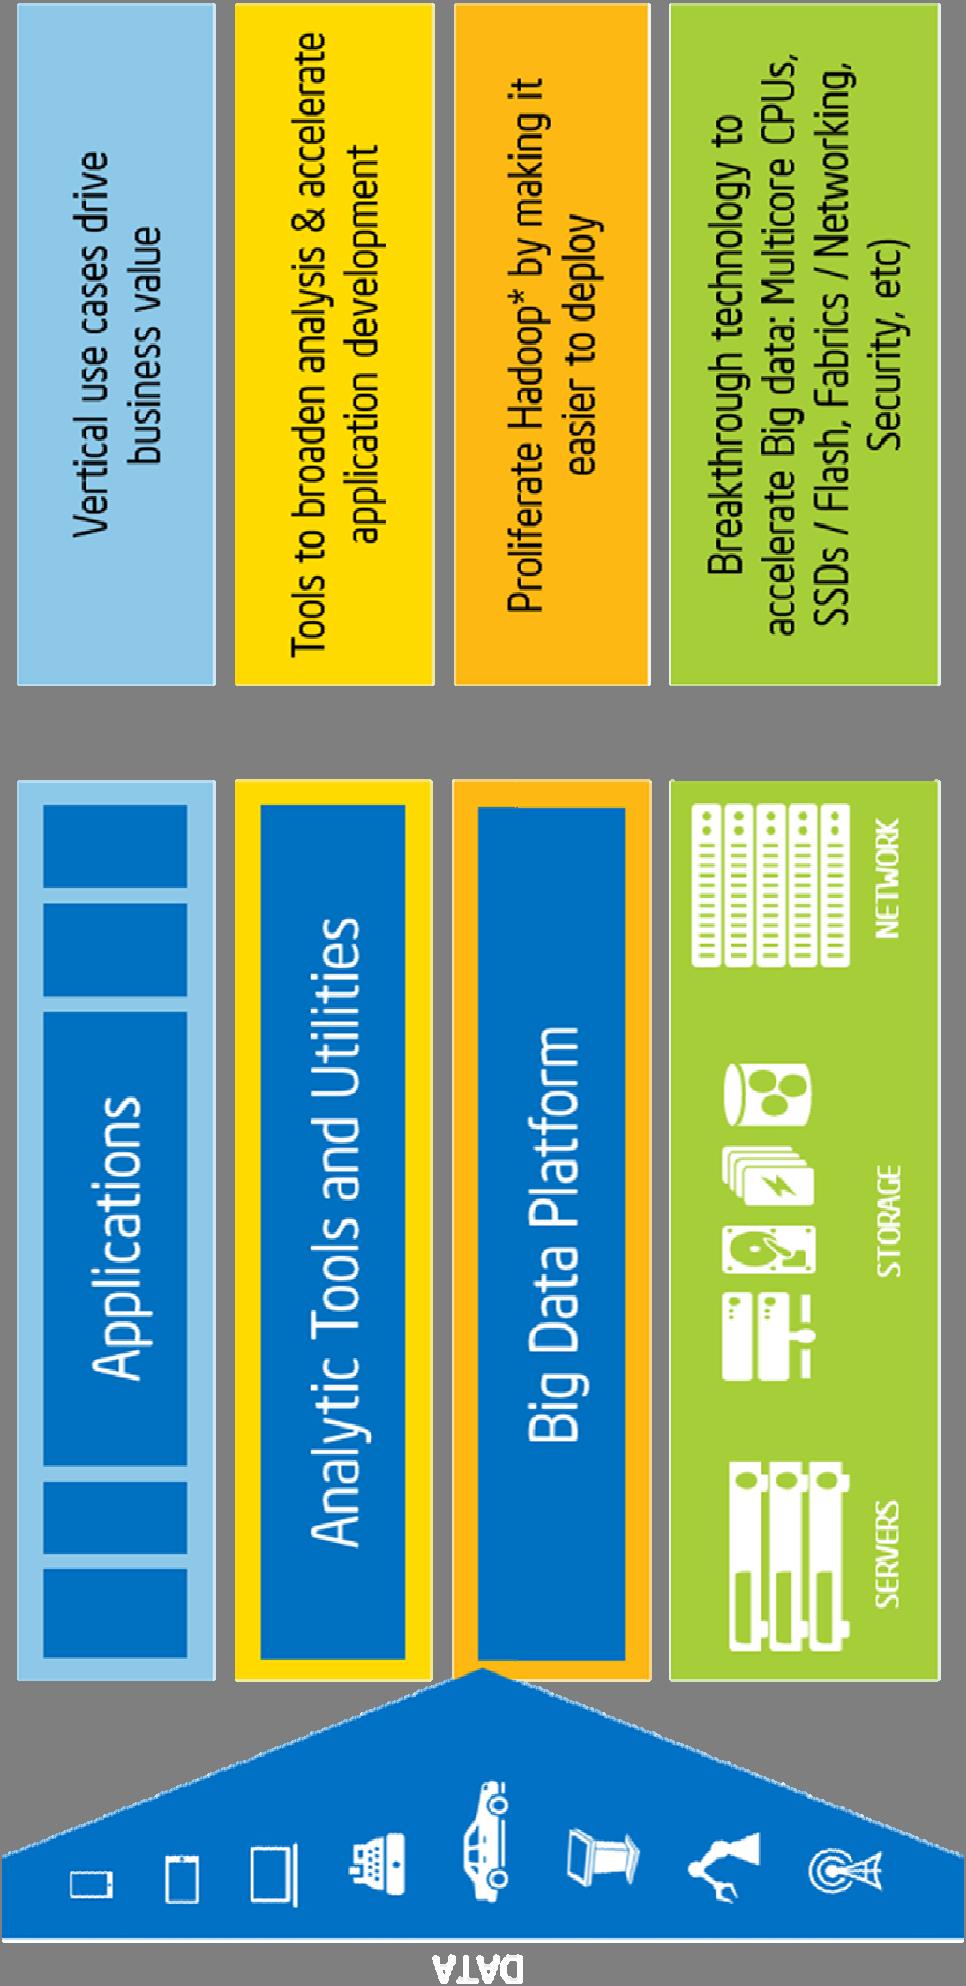 Intel Big Data Analytics Platform Strategy 2015